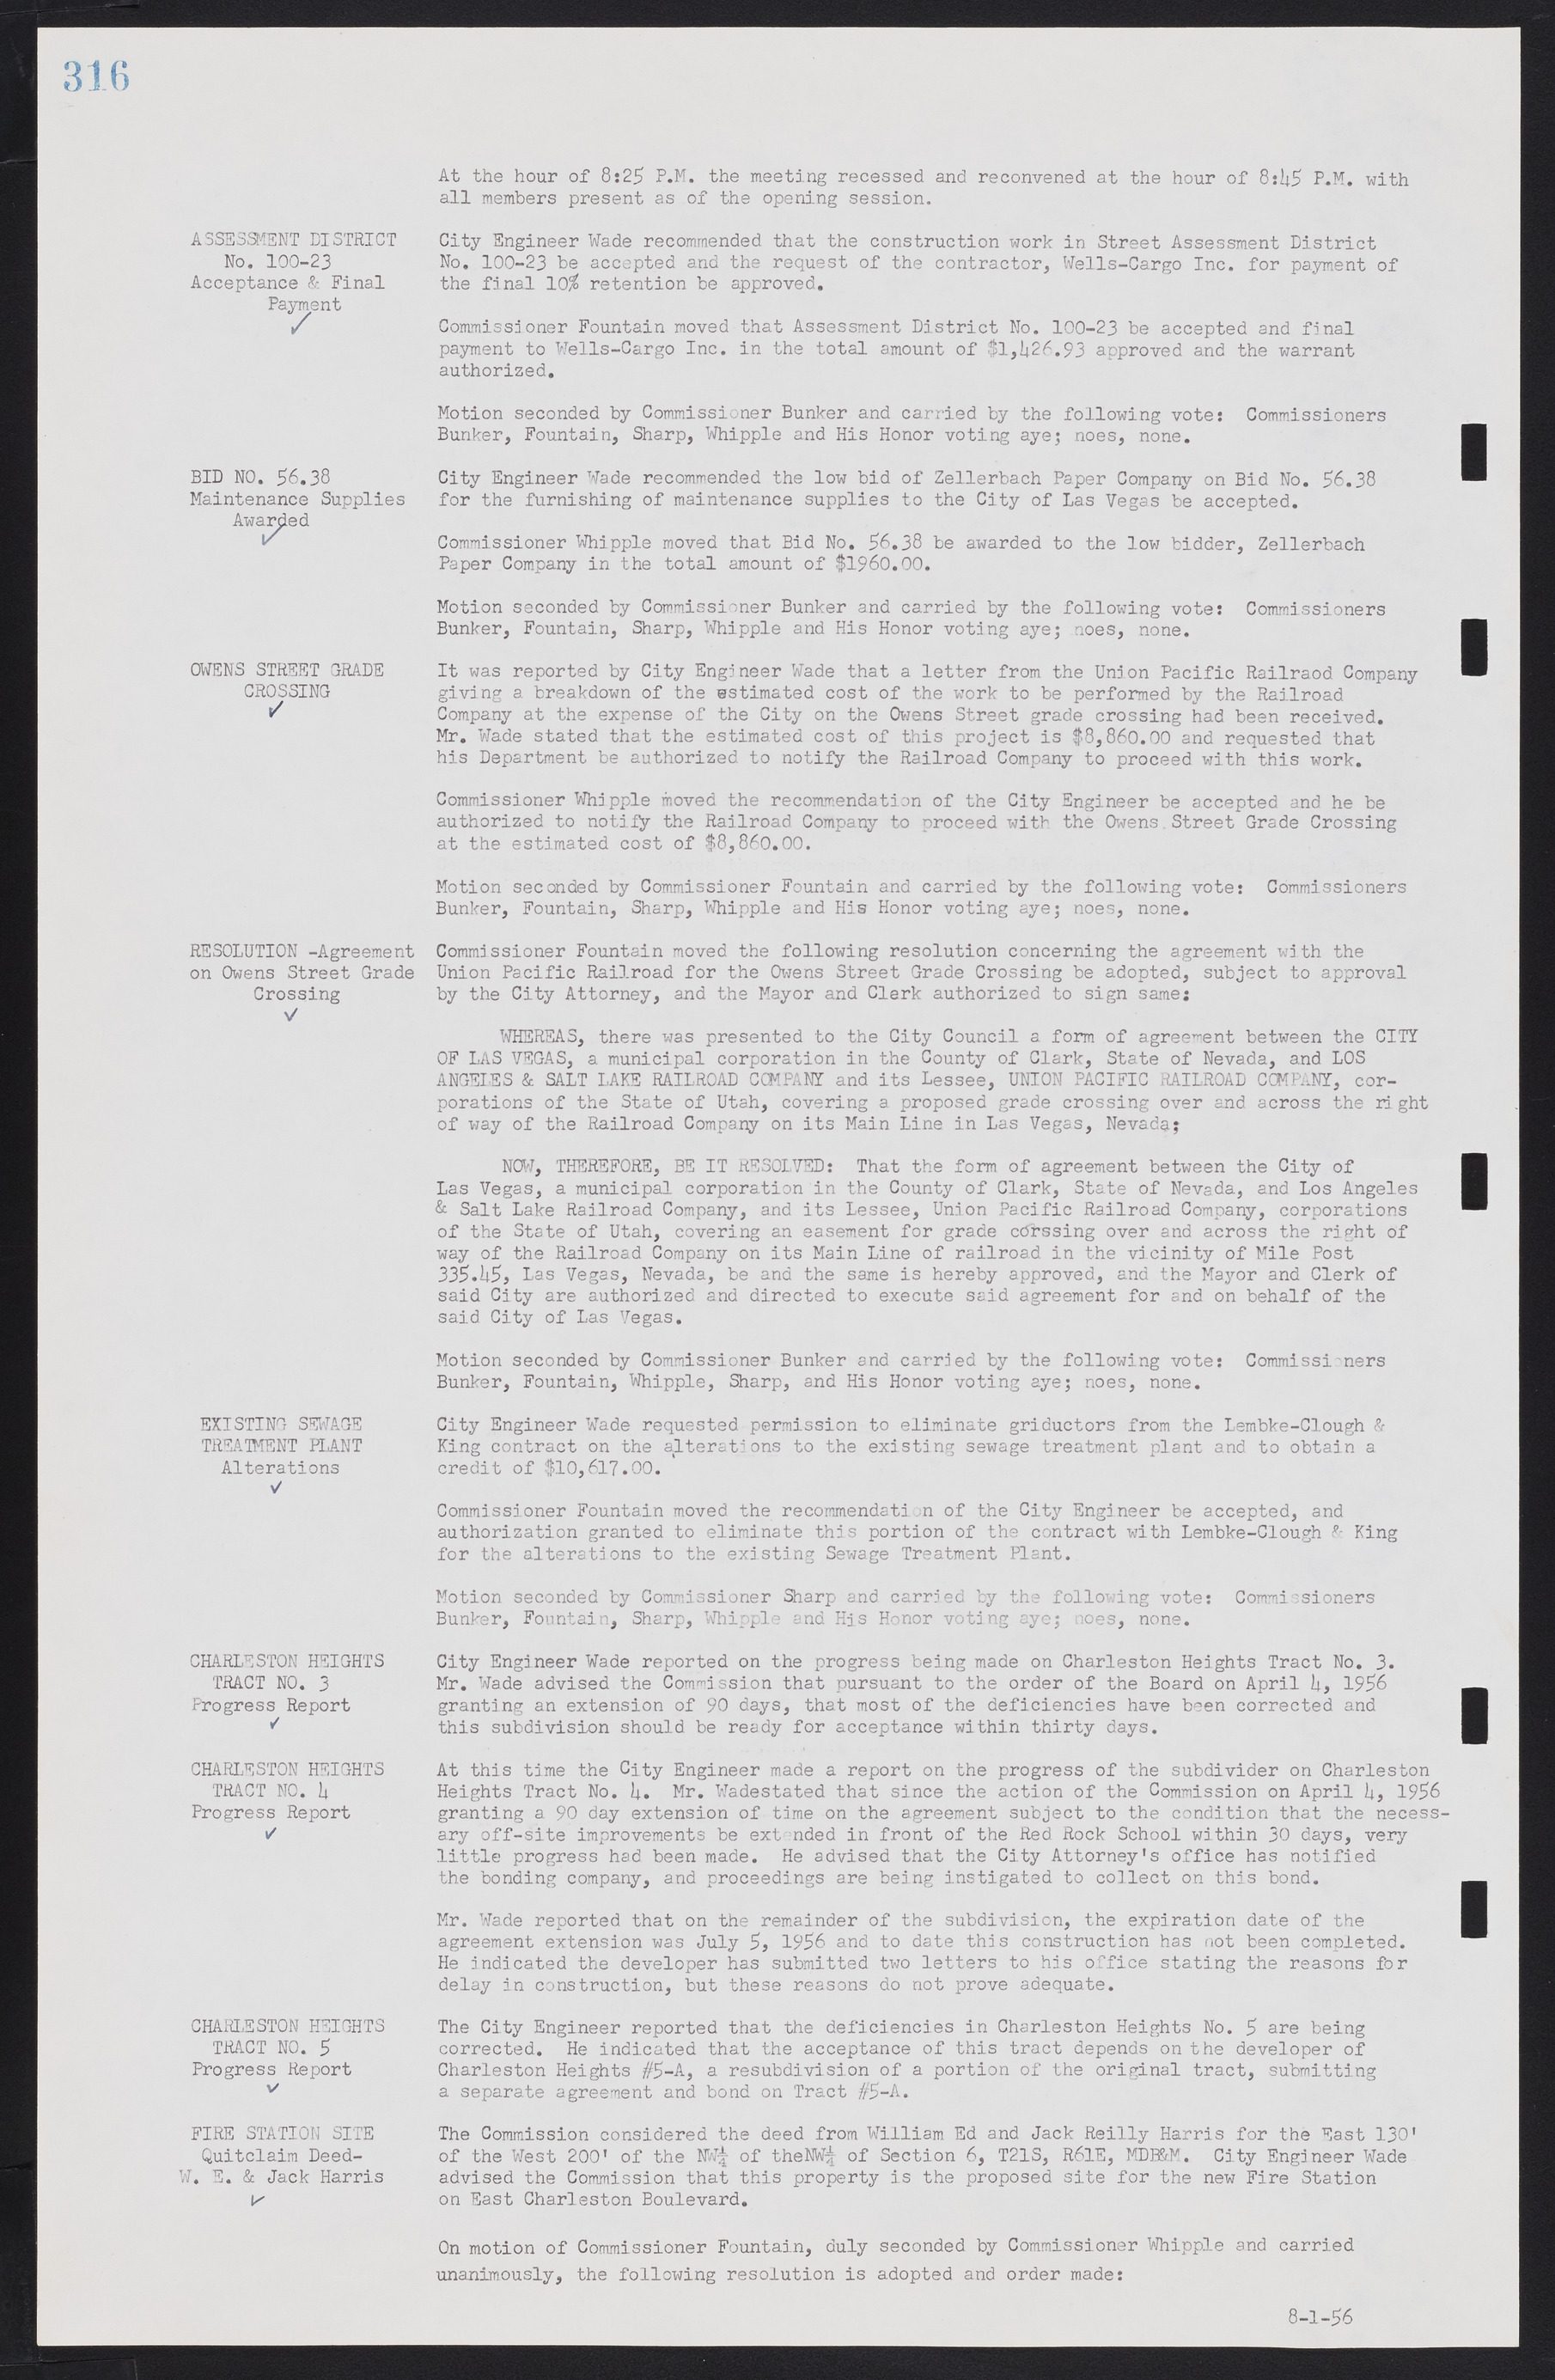 Las Vegas City Commission Minutes, September 21, 1955 to November 20, 1957, lvc000010-336